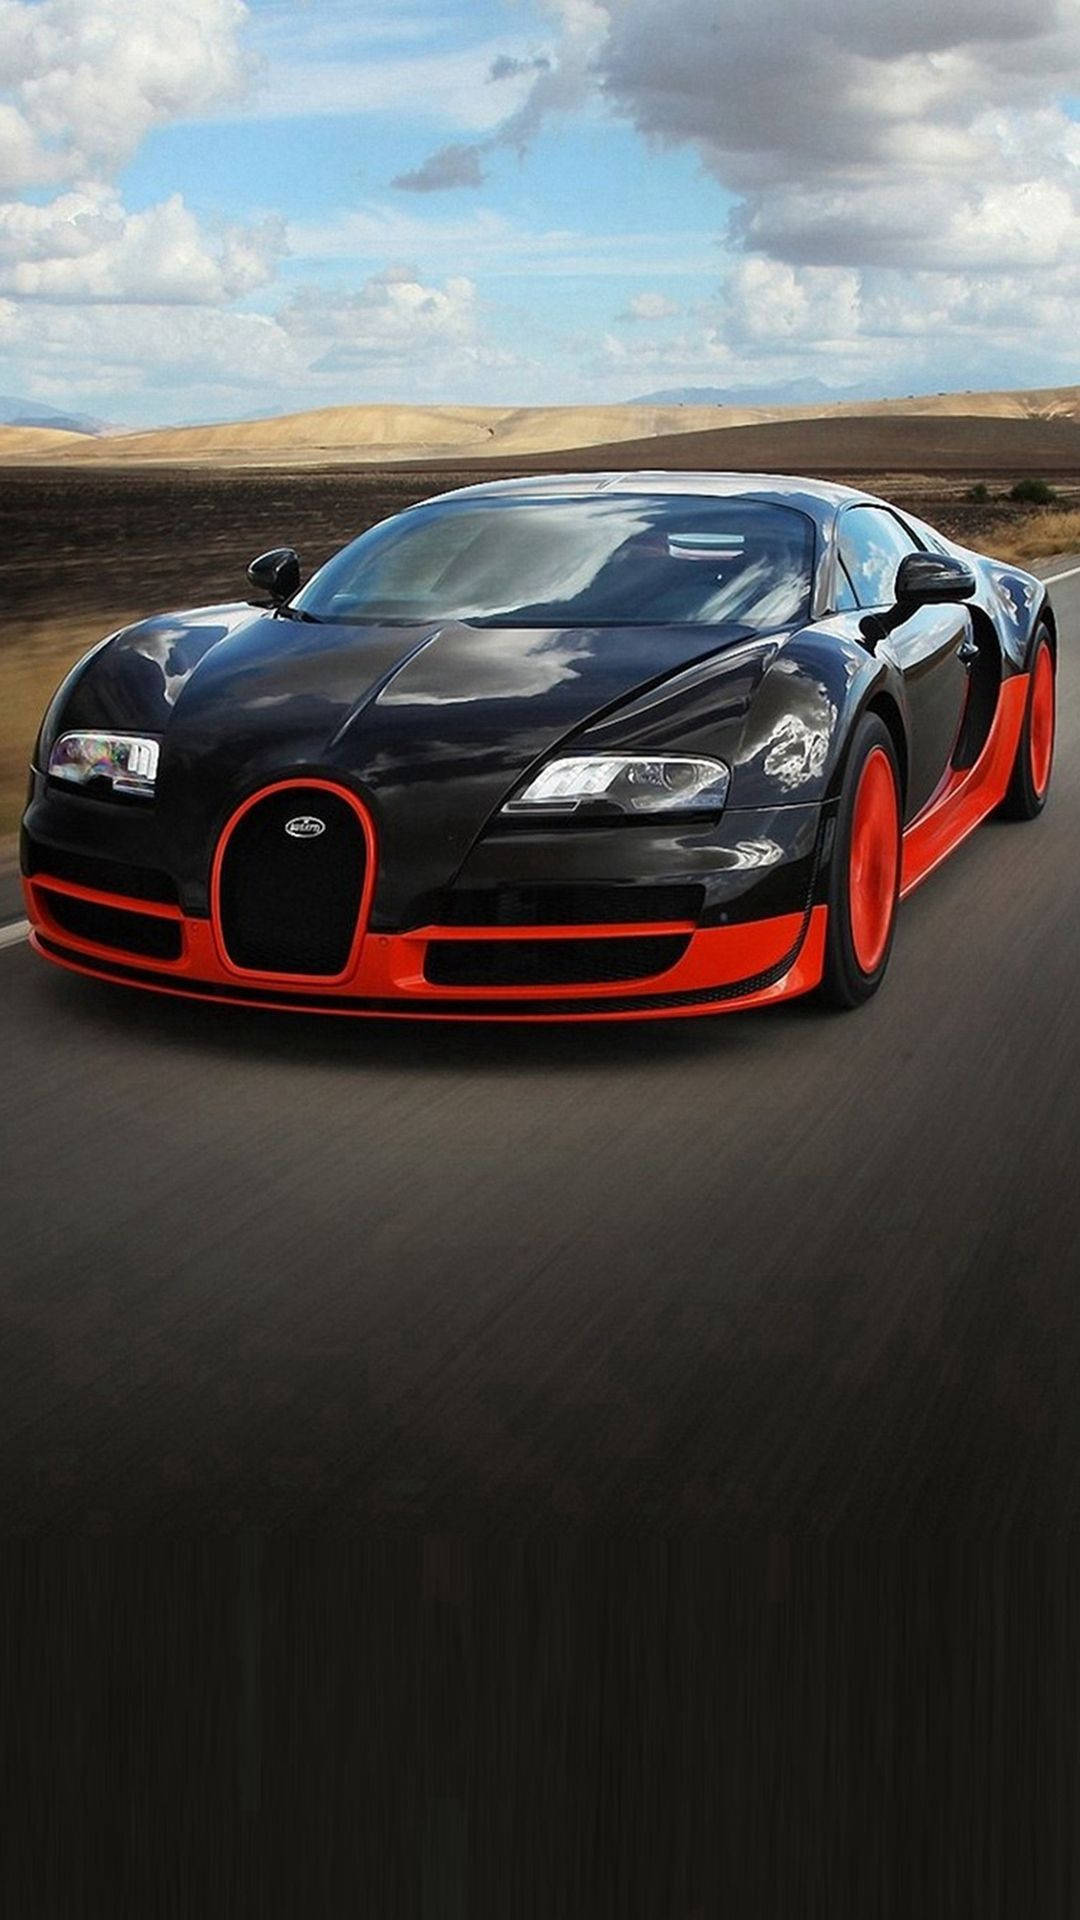 Iphonex Car Bugatti Veyron Would Be Translated As 